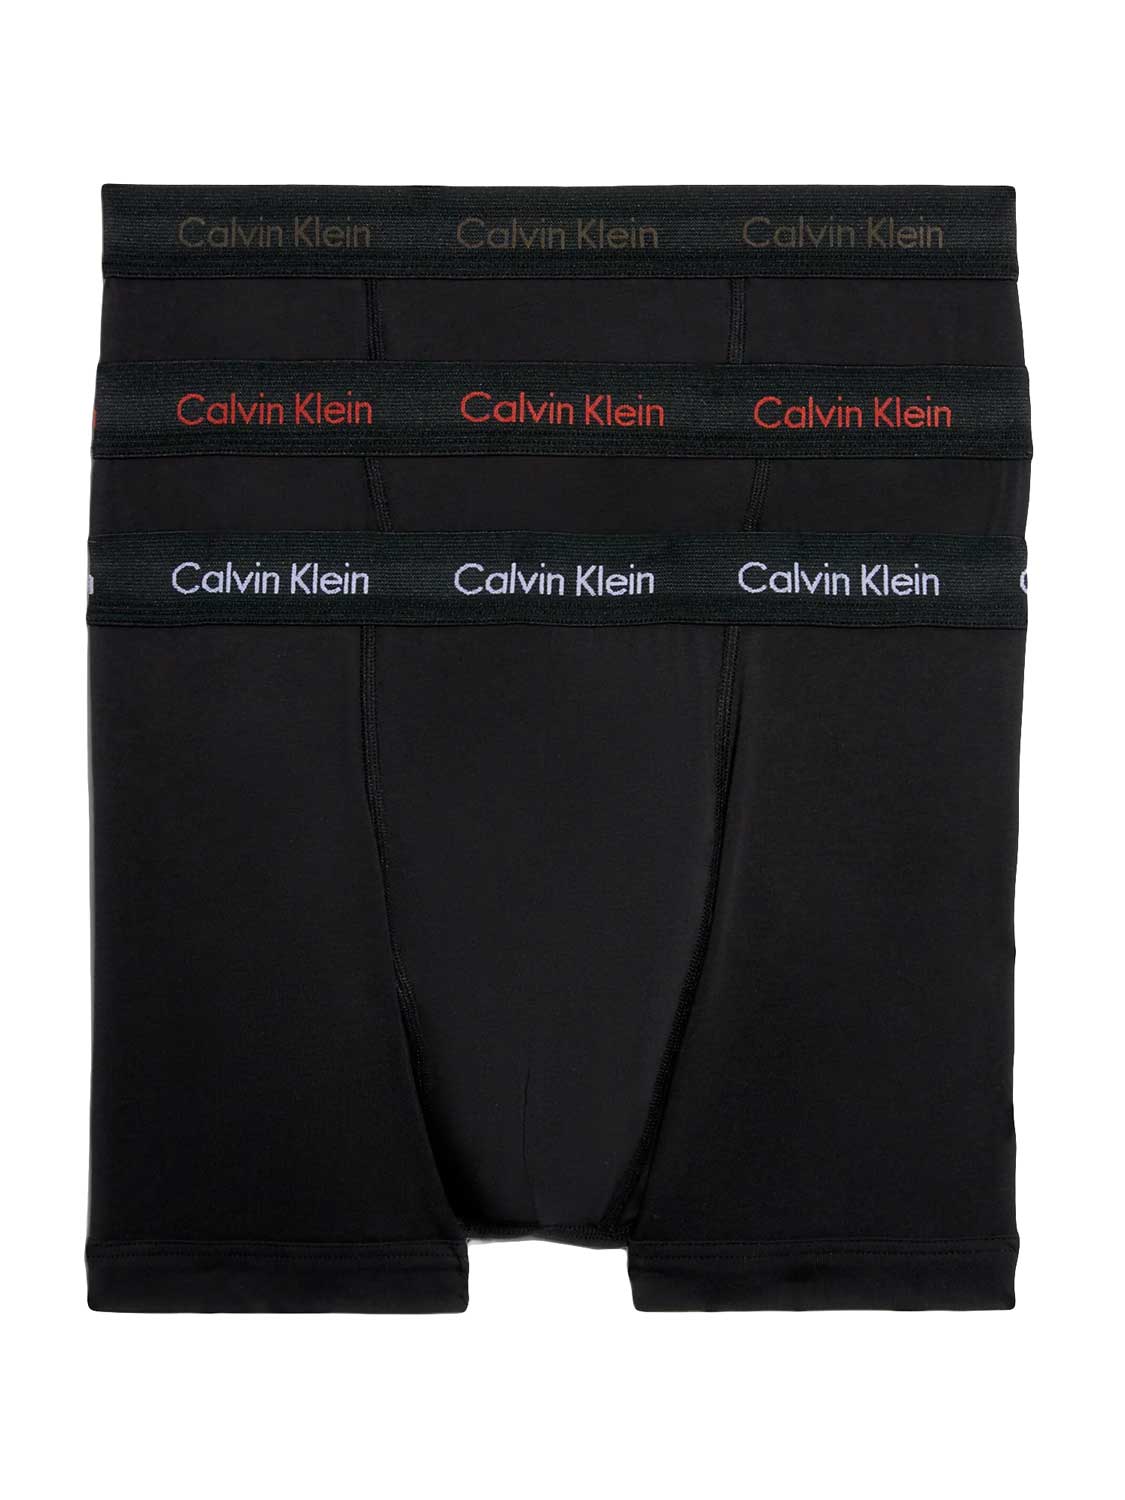 Calvin Klein - Heren - 3-Pack Trunk - B-PWR PLM, FUSC BRY, ELEMENT HTR WB - S